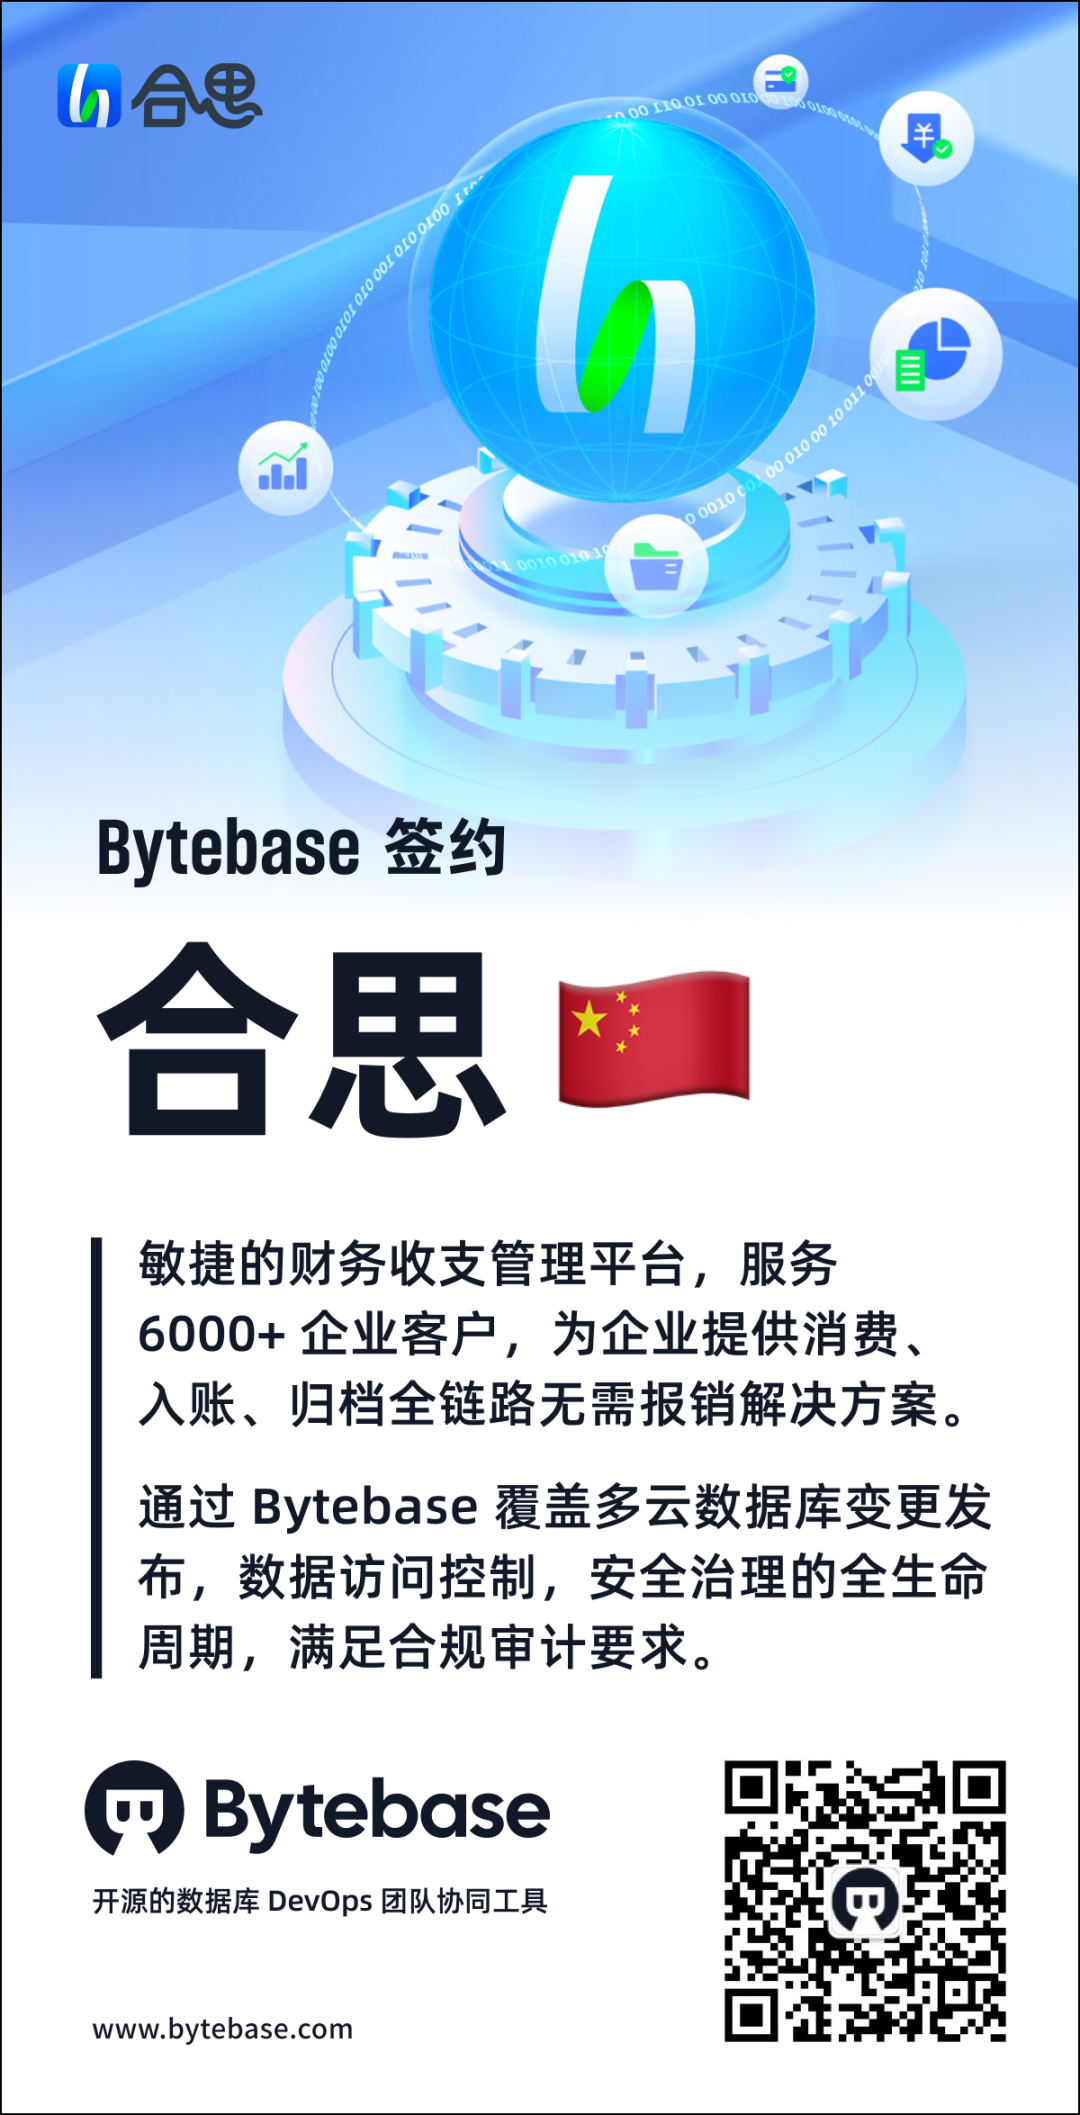 Bytebase 签约合思，覆盖多云数据库变更发布，数据访问控制，安全治理的全生命周期，确保符合合规审计要求